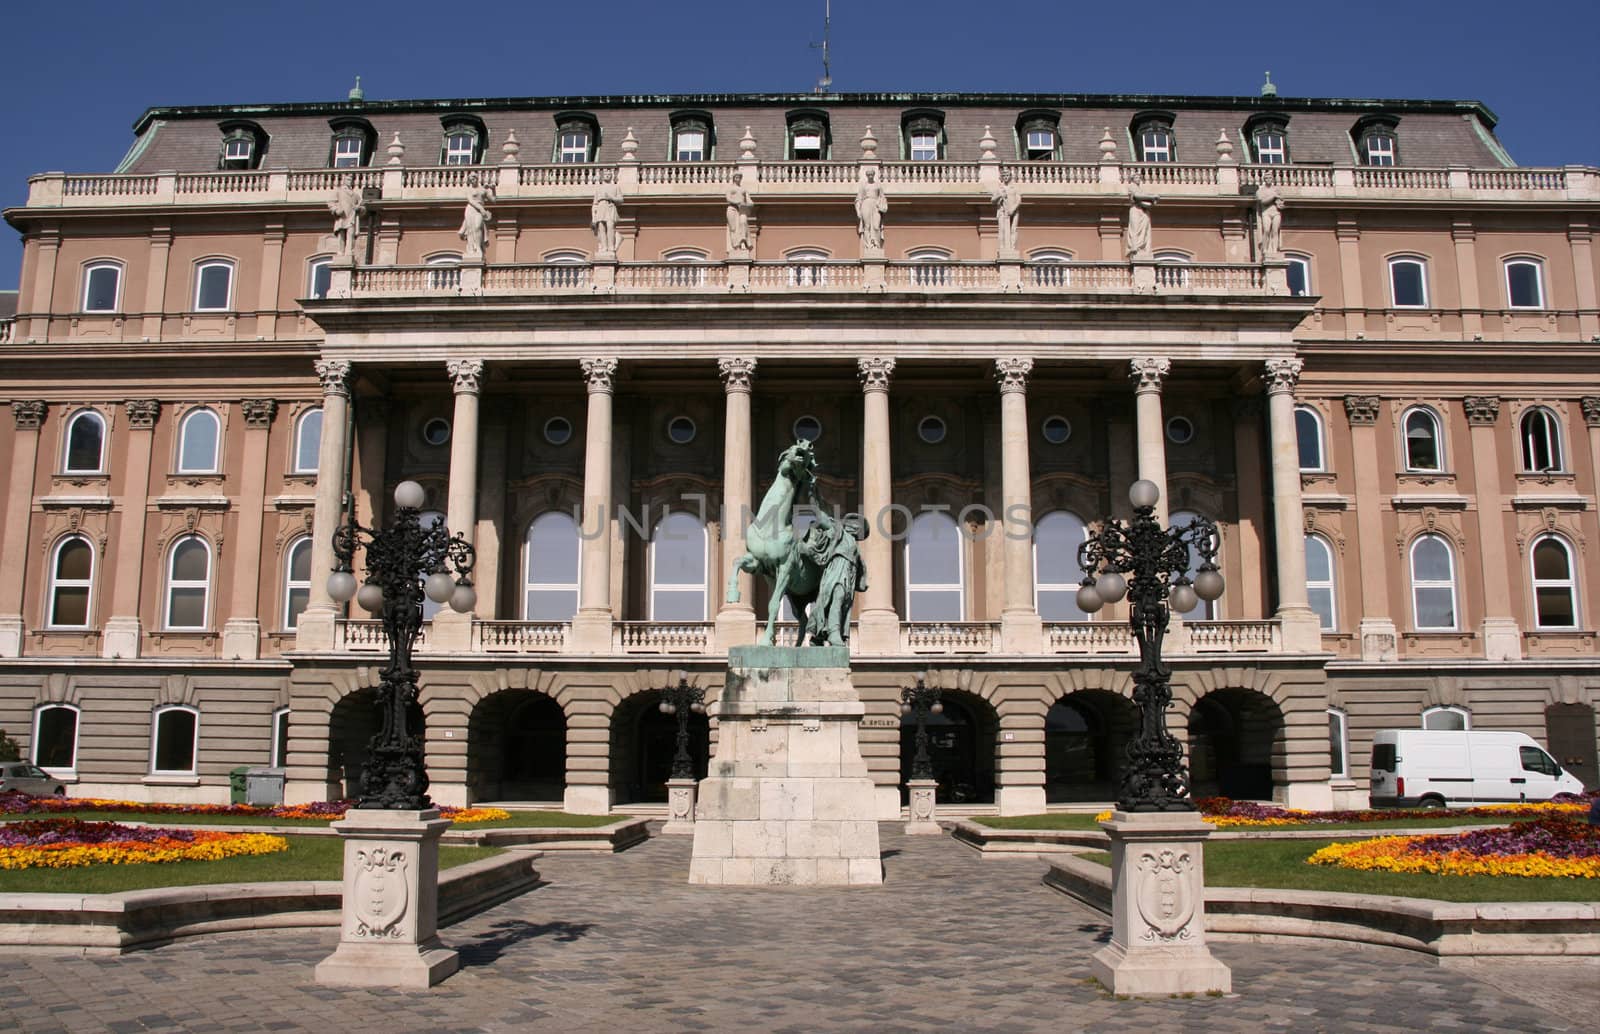 Tourist attraction, beautiful landmark of Hungary capital city - Budapest. Royal palace on Buda hill.